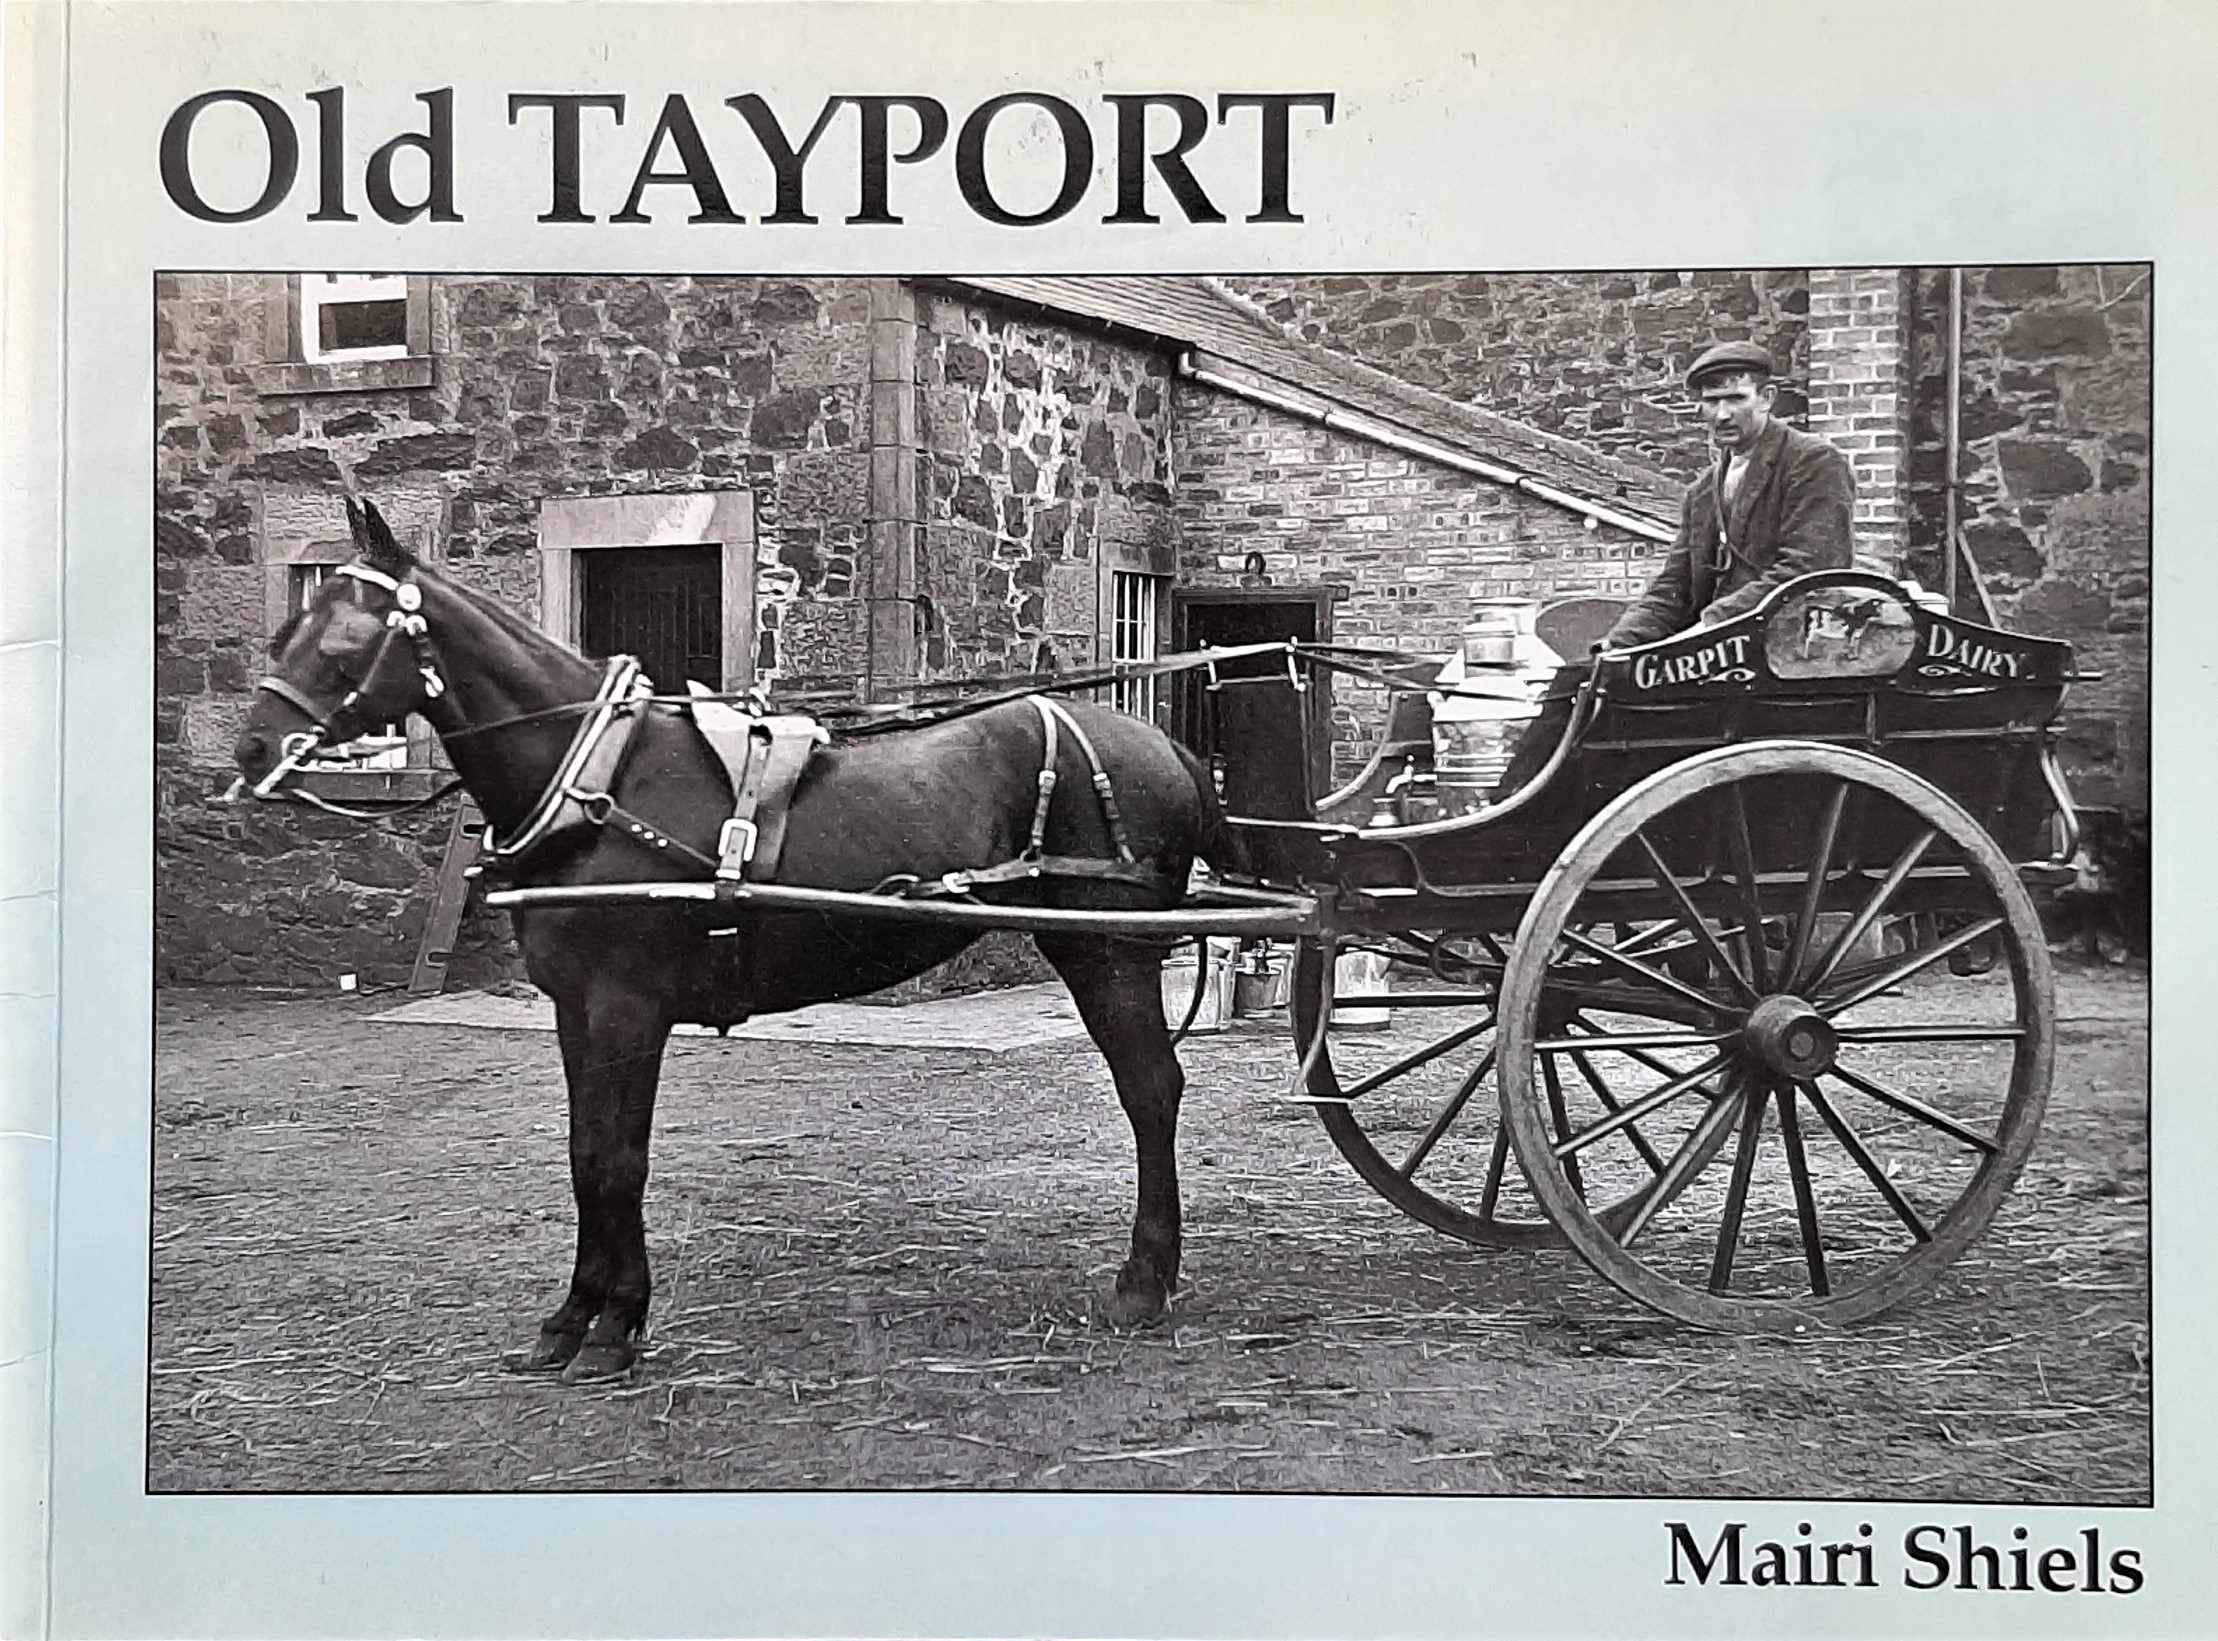 “Old Tayport” by Mairi Shiels (1998)